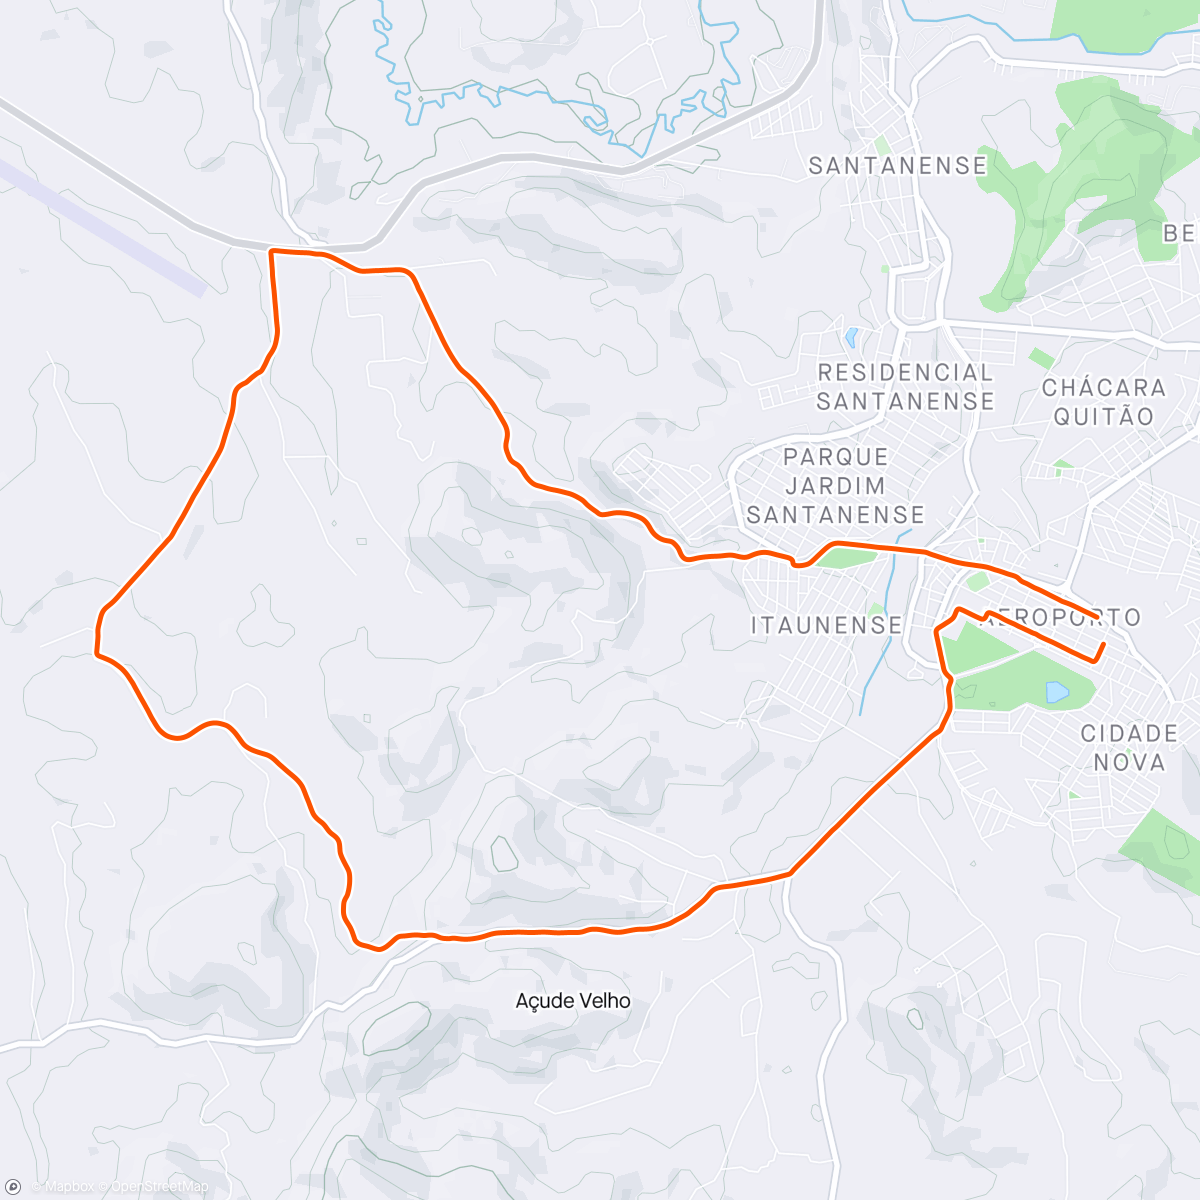 Mapa de la actividad (Pedalada de mountain bike vespertina)